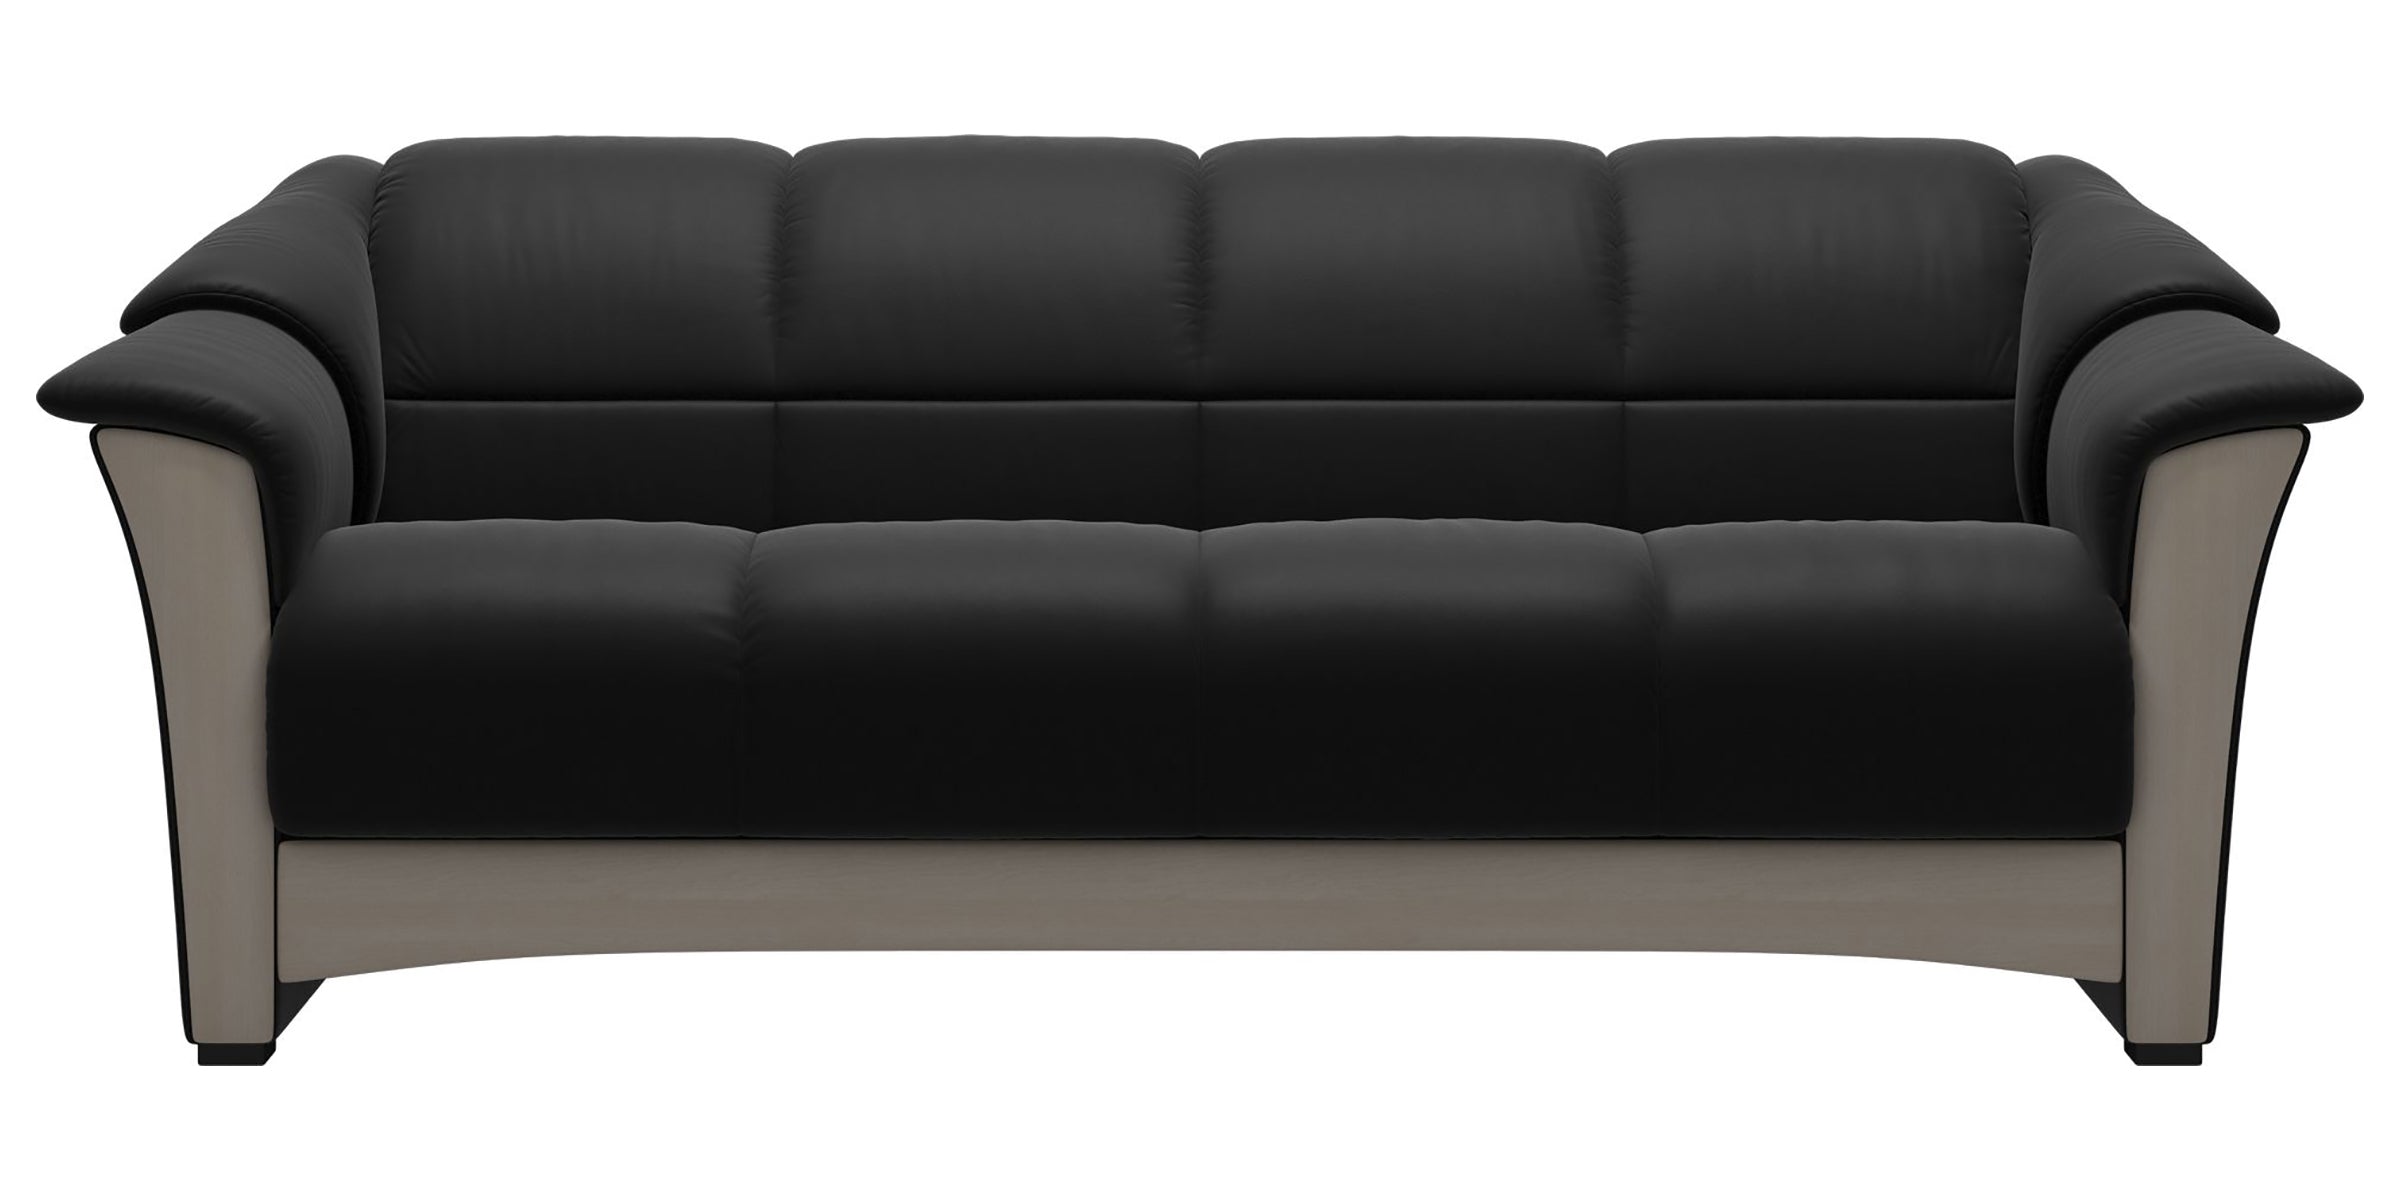 Paloma Leather Black and Whitewash Base | Stressless Oslo Sofa | Valley Ridge Furniture